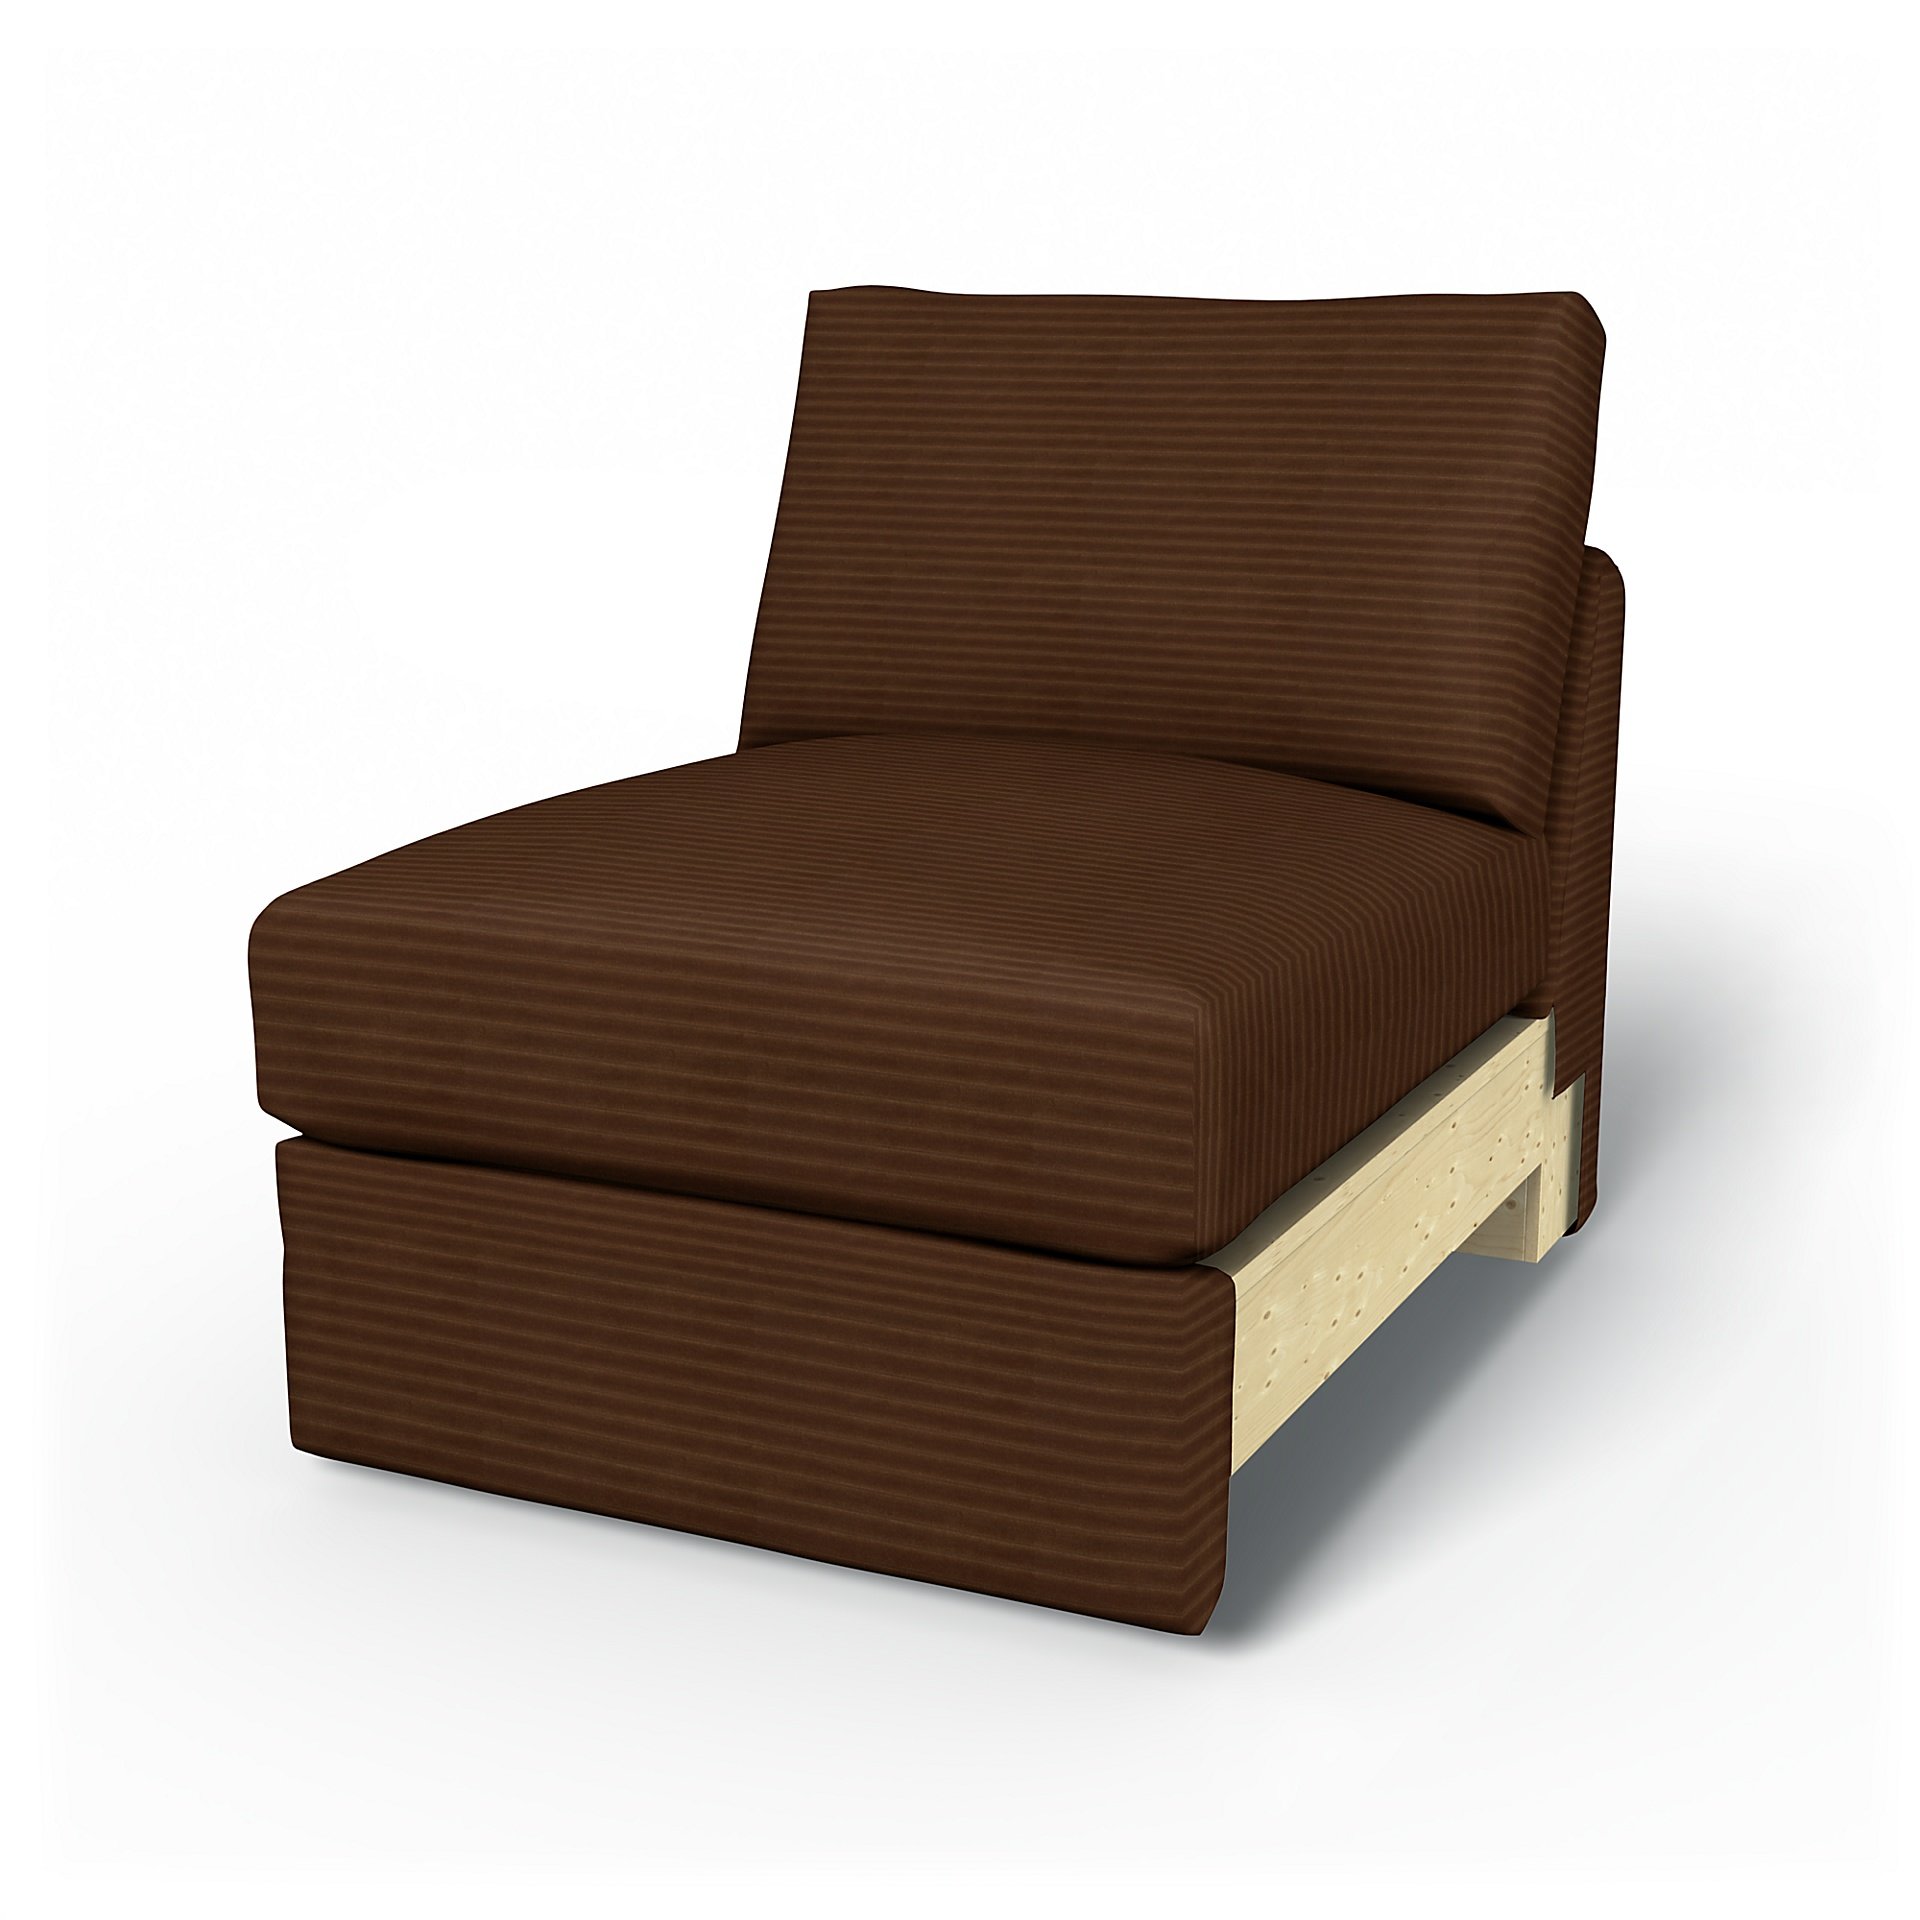 IKEA - Vimle 1 Seat Section Cover, Chocolate Brown, Corduroy - Bemz